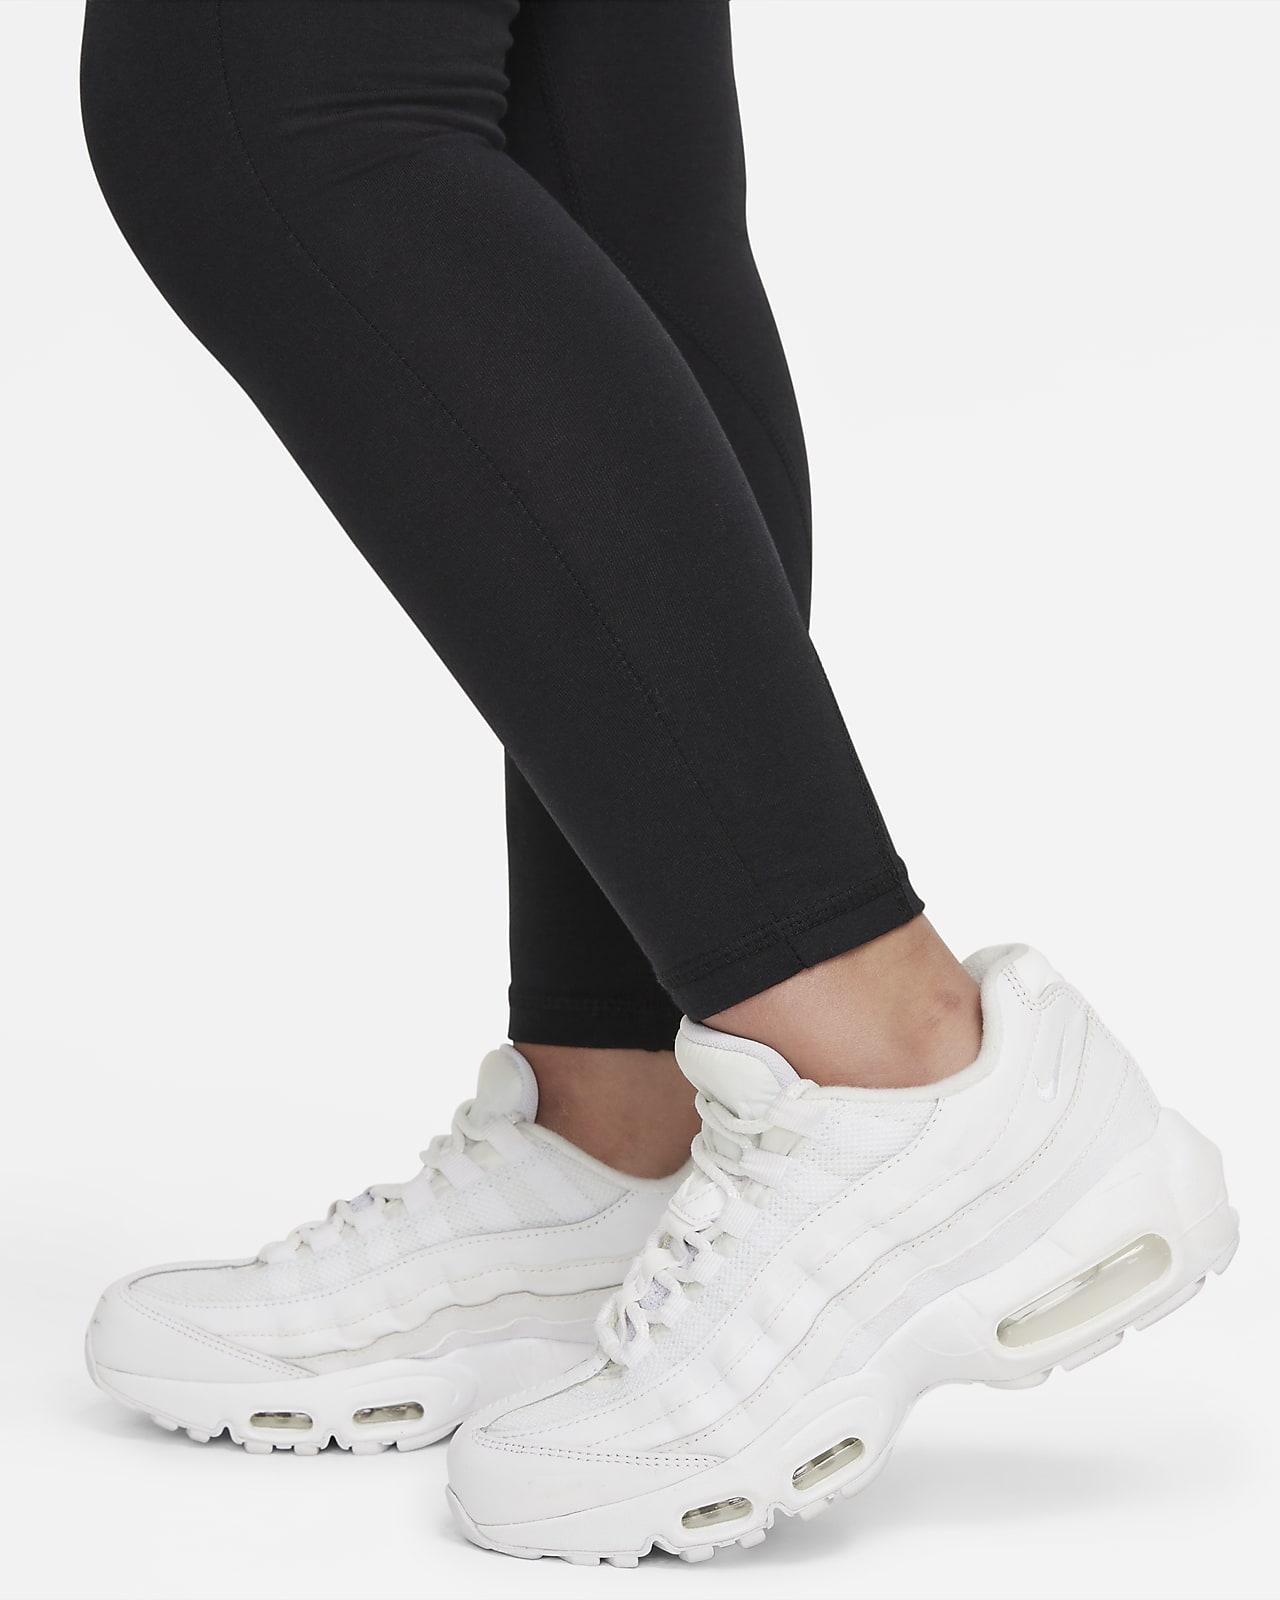 P8 Nike NEW Girls Size XS Older Training Tight Leggings BV2813-010 Black